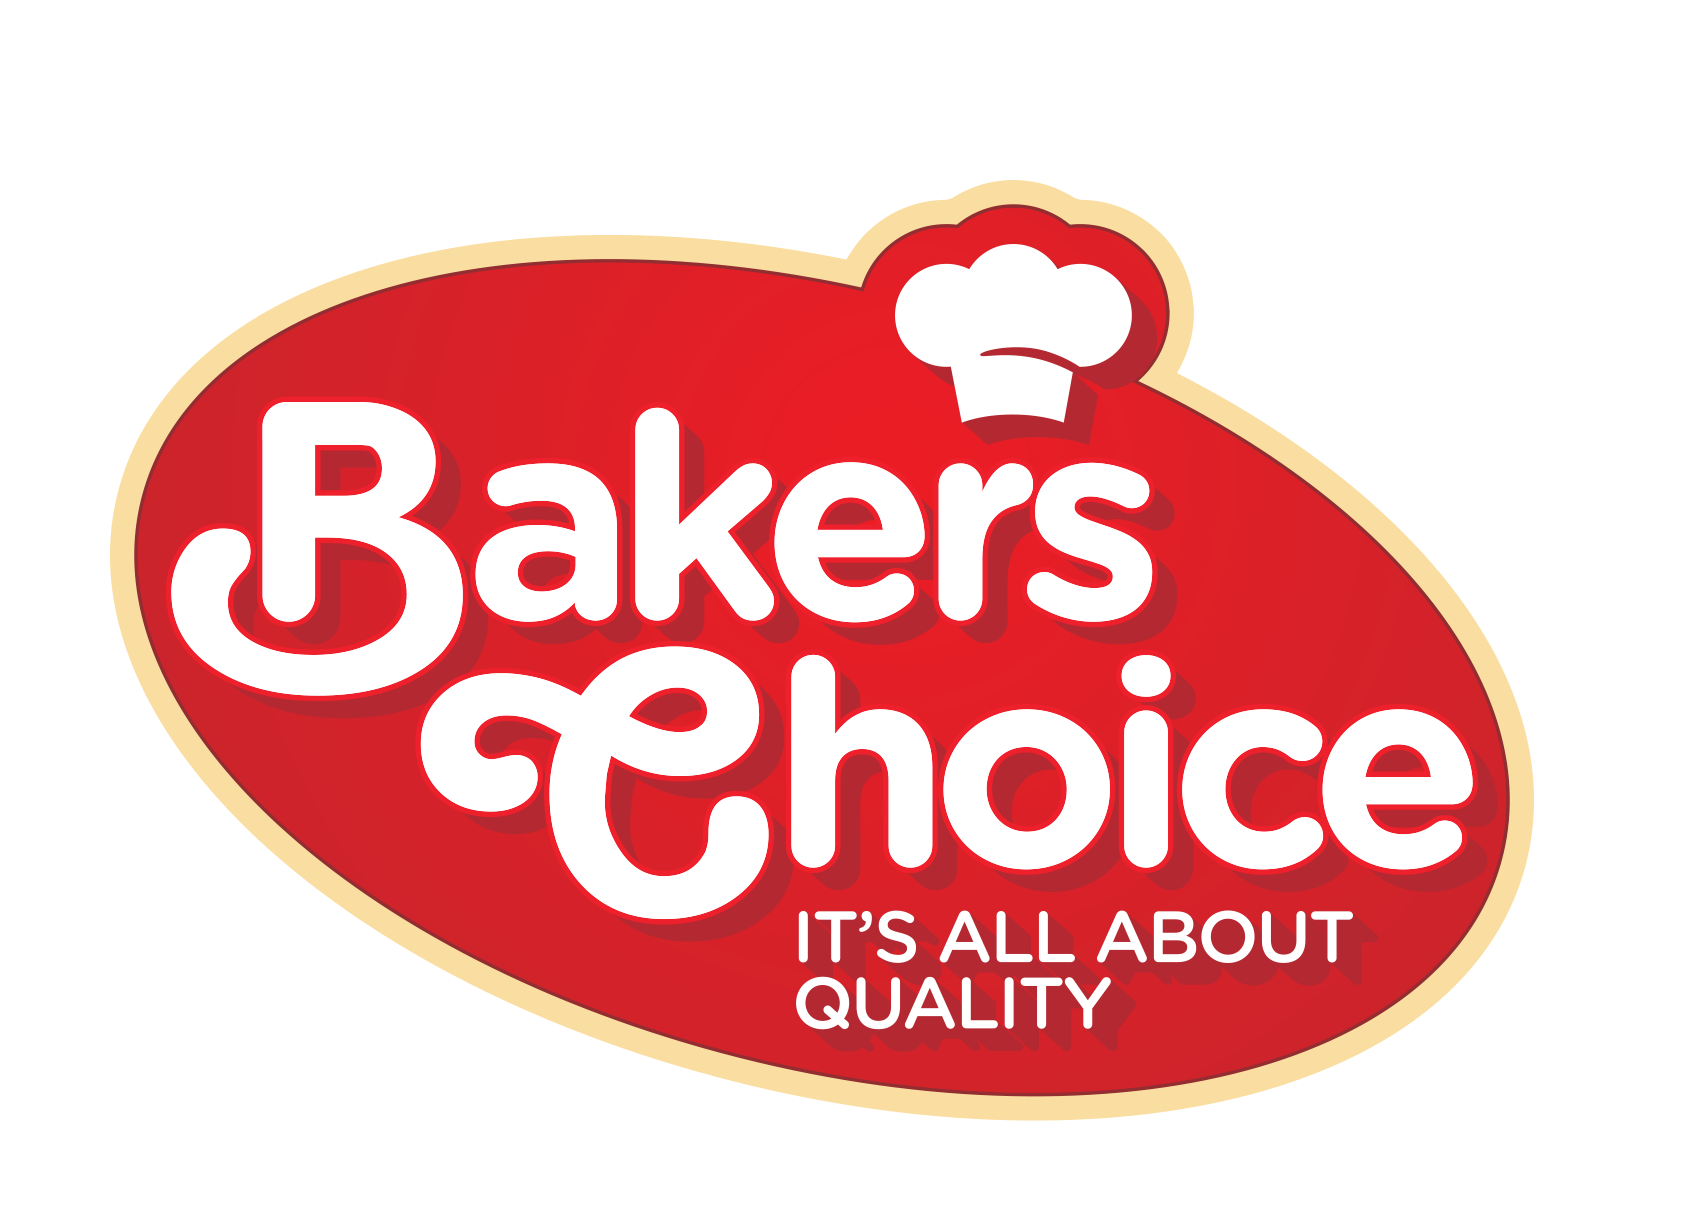 Black Edible Glitter  Bakers Choice - Premium Kosher Baking